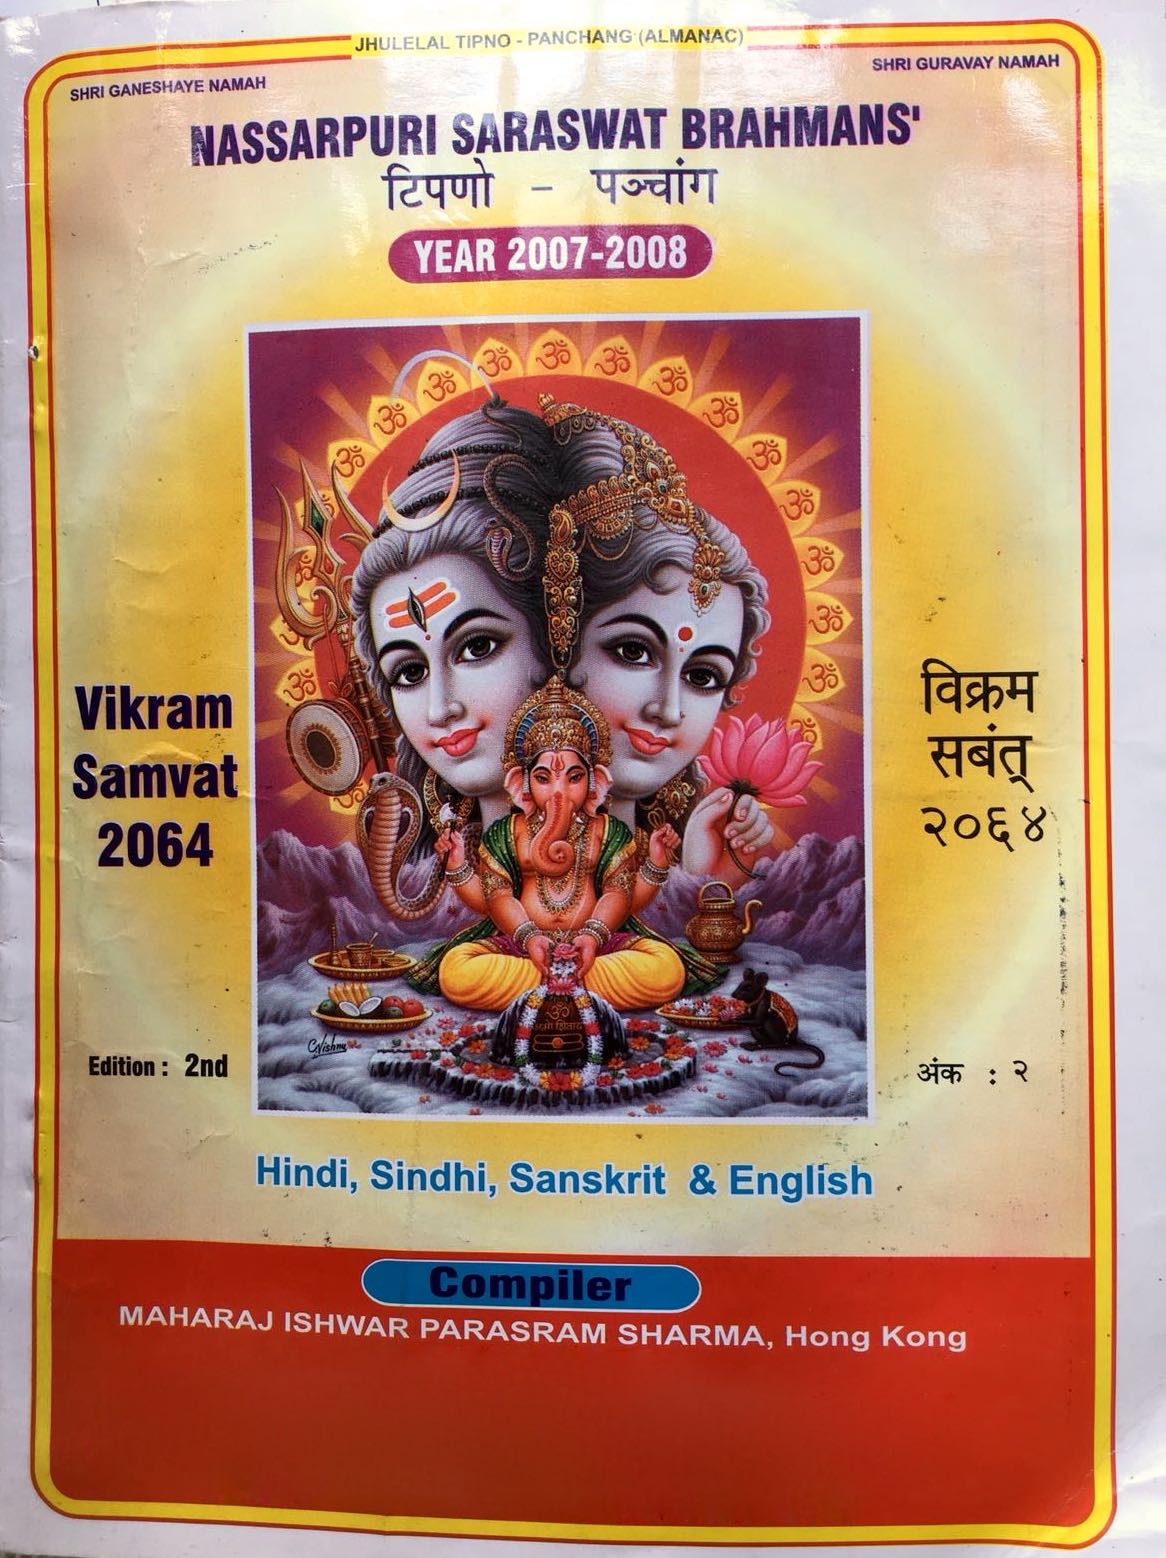 To publish Panchang in Panchayat's name for Nassarpuri Saraswat Brahmans' Panchang only for the Year 2007-2008 compiler Maharaj Ishwar Parsram Sharma, Hong Kong - Jhulelal Tipno Panchang (Almanac)